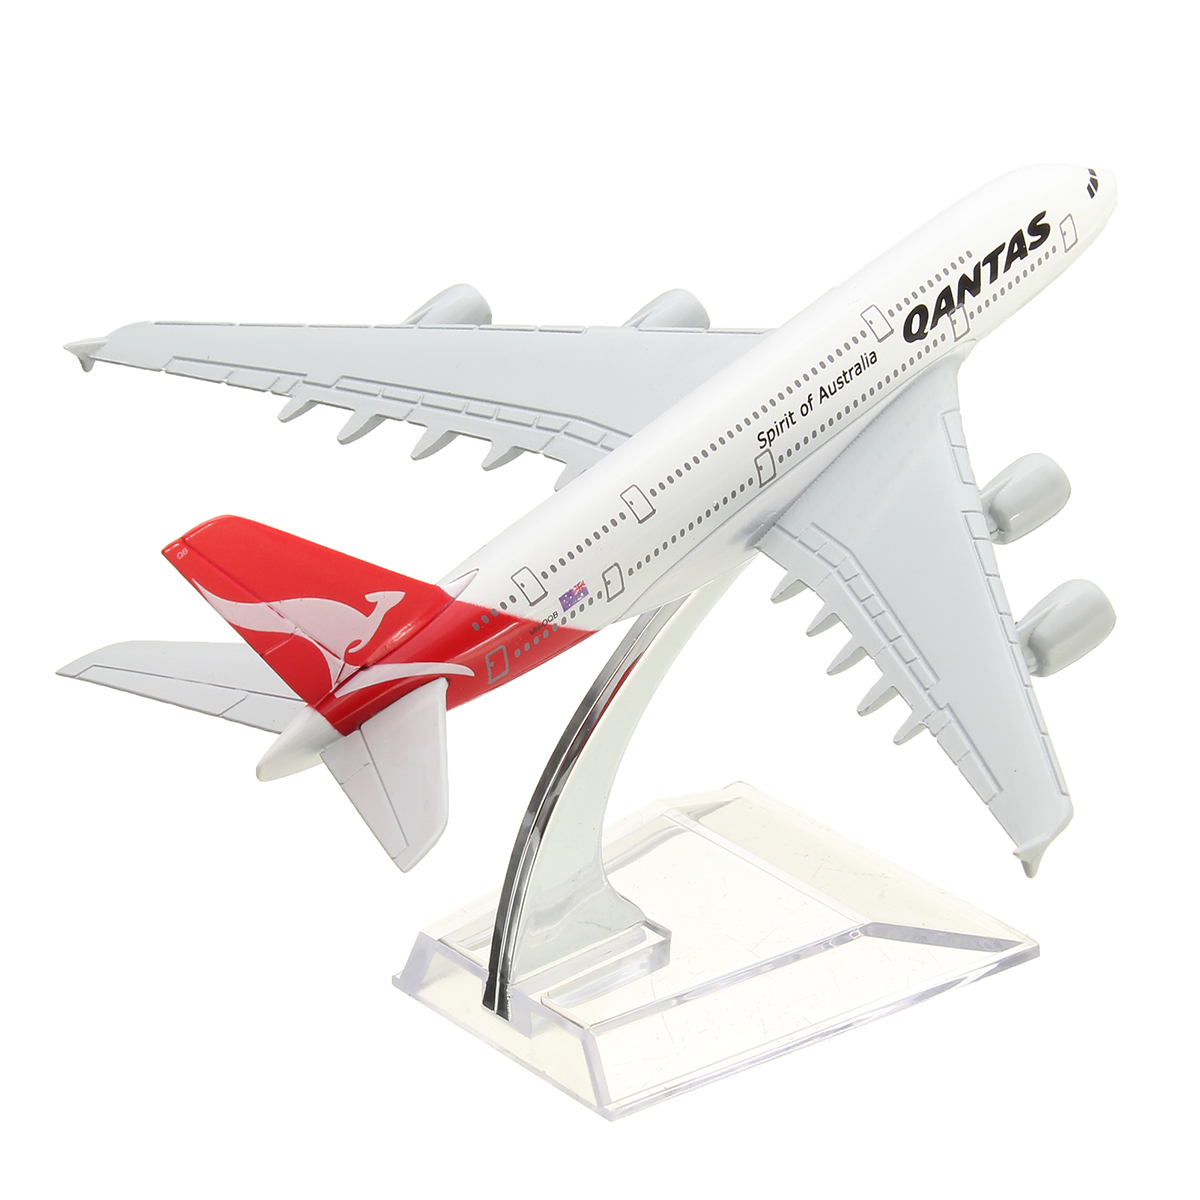 16cm Airplane Metal Plane Model Aircraft A380 AUSTRALIA QANTAS Aeroplane Scale 